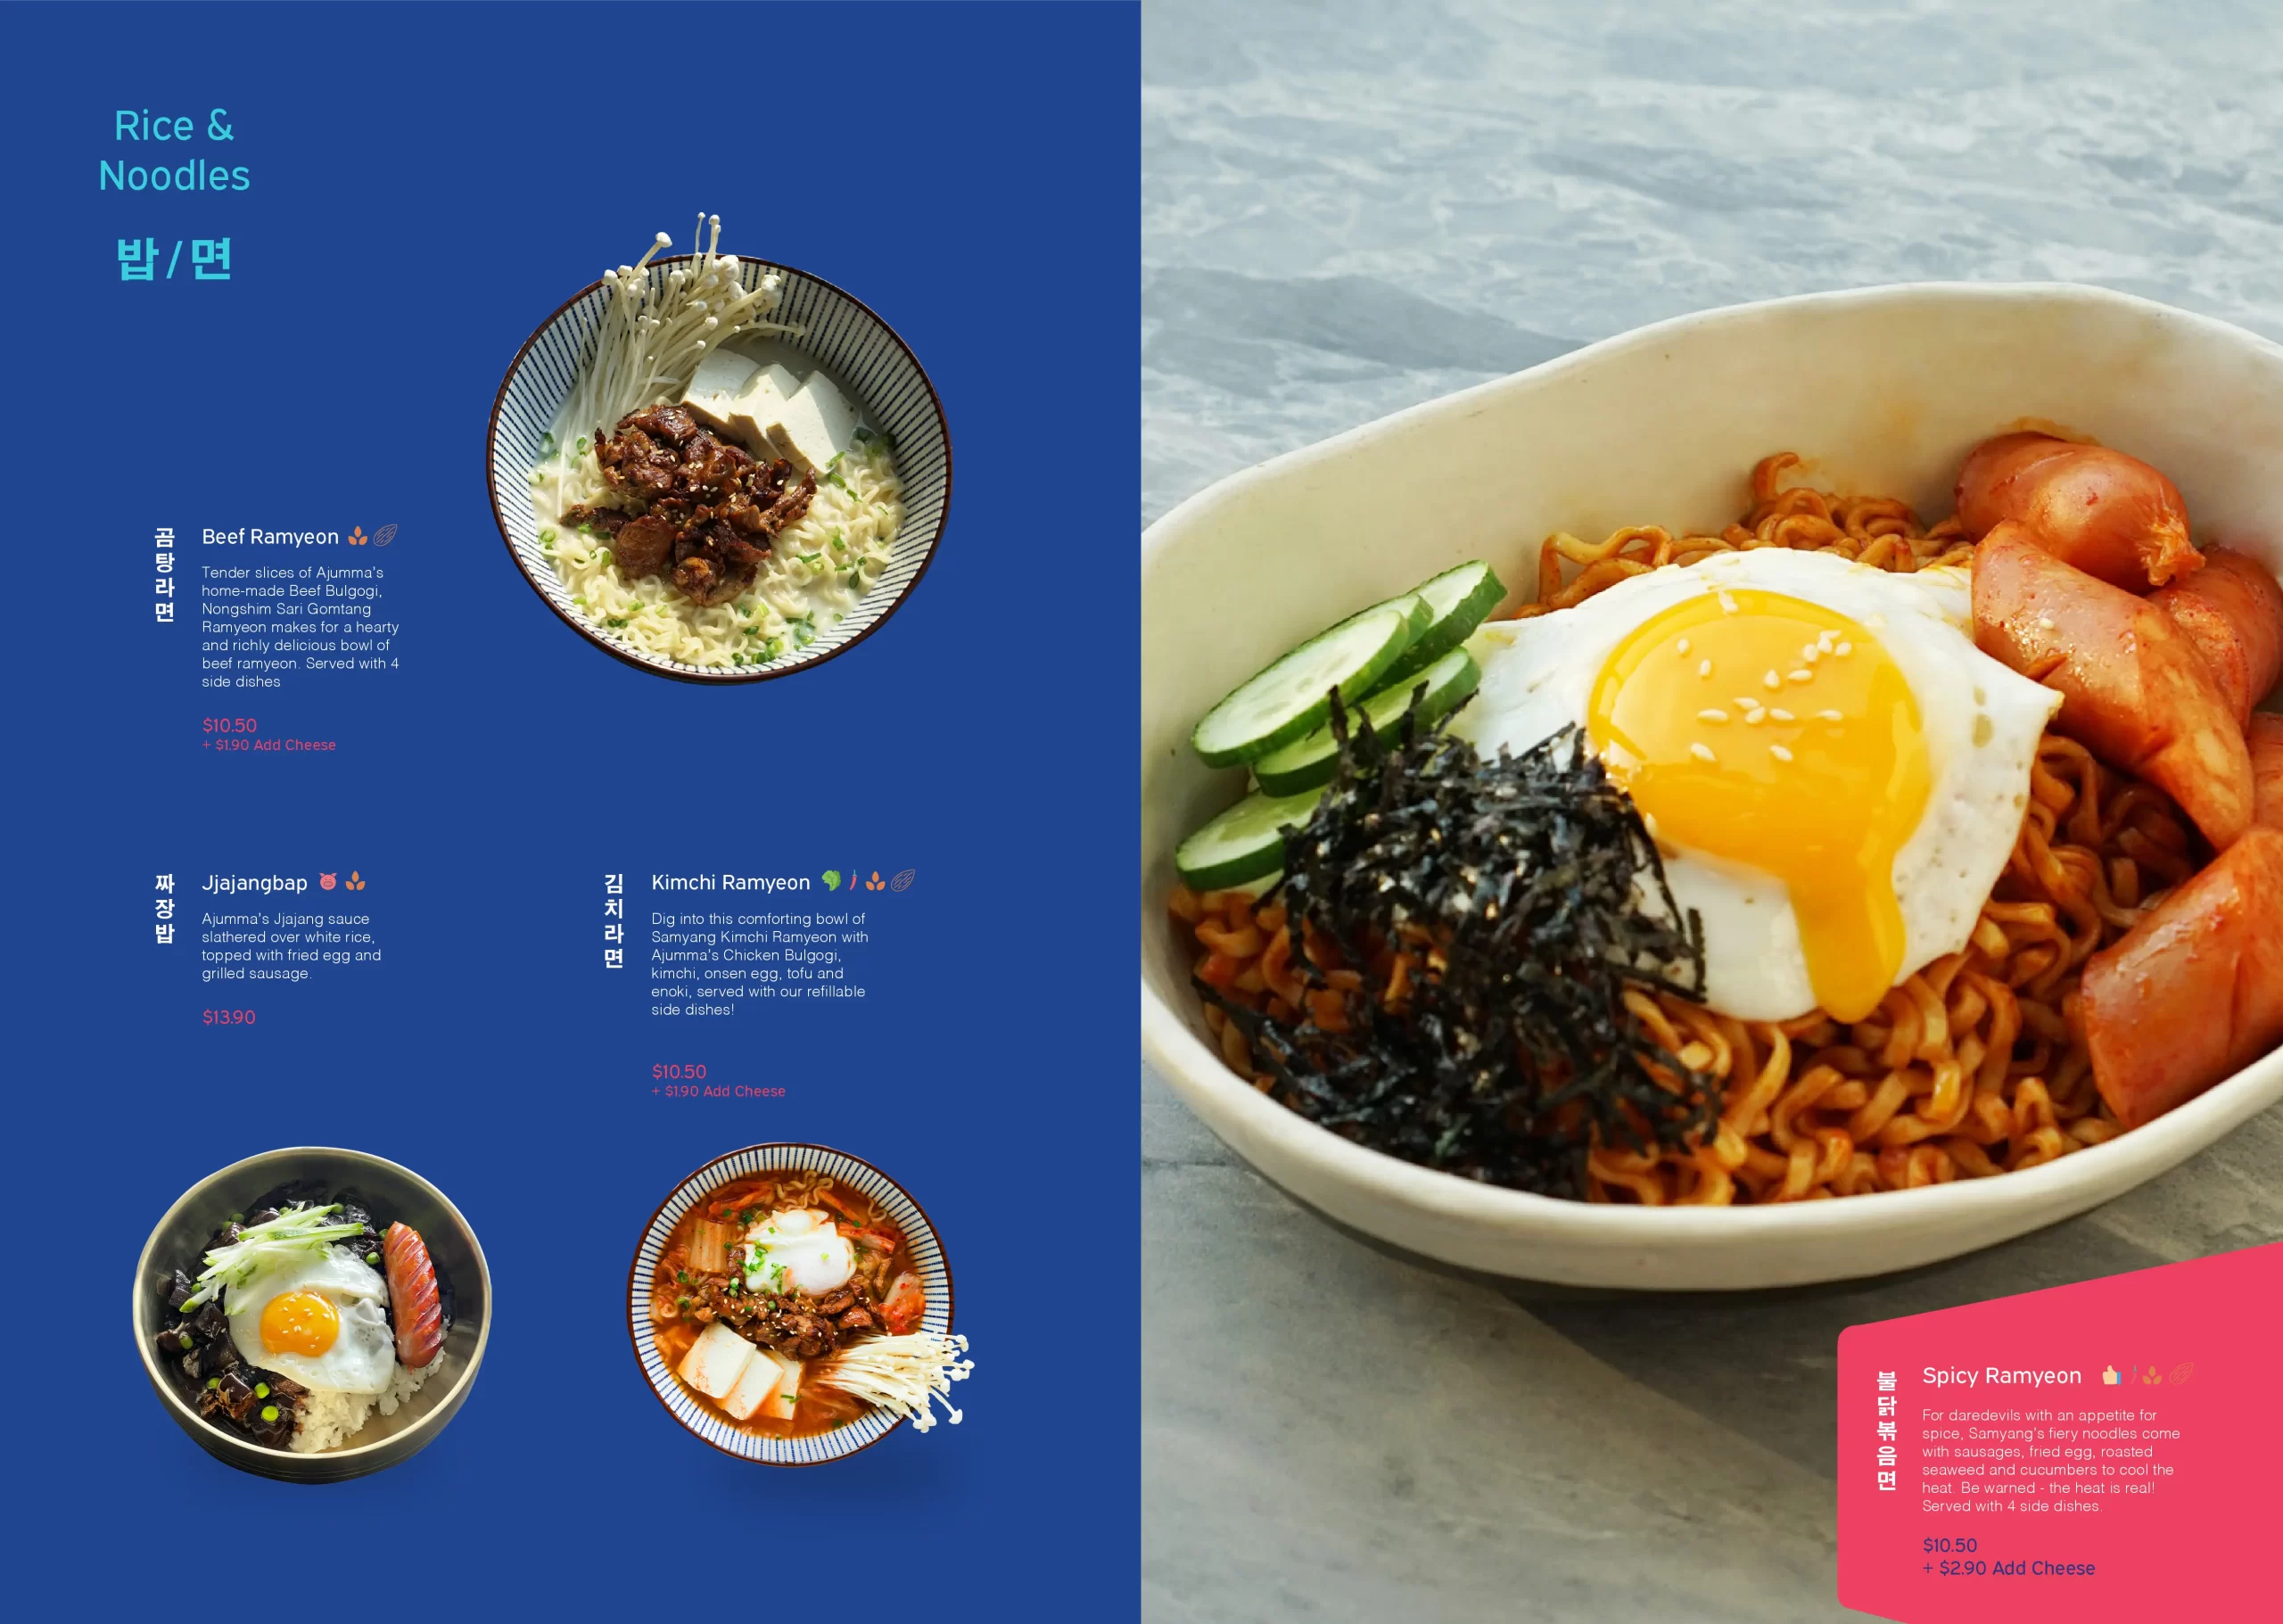 Ajumma’s Singapore rice & noodles menu